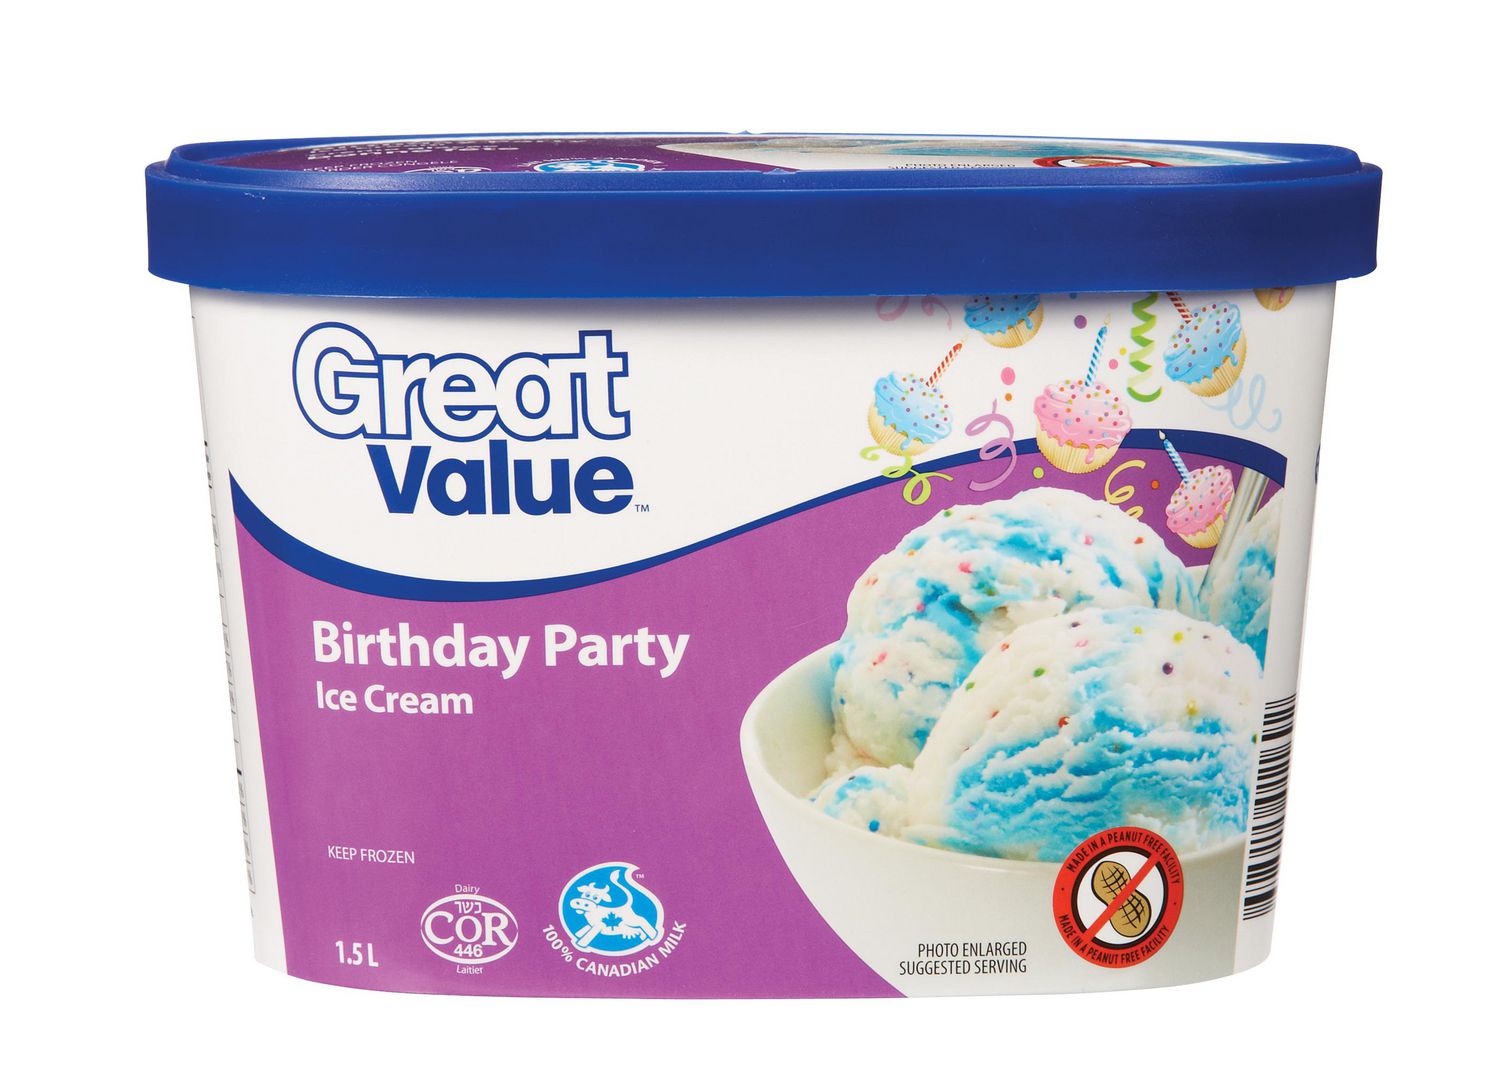 Great Value Birthday Party Ice Cream Walmart Canada